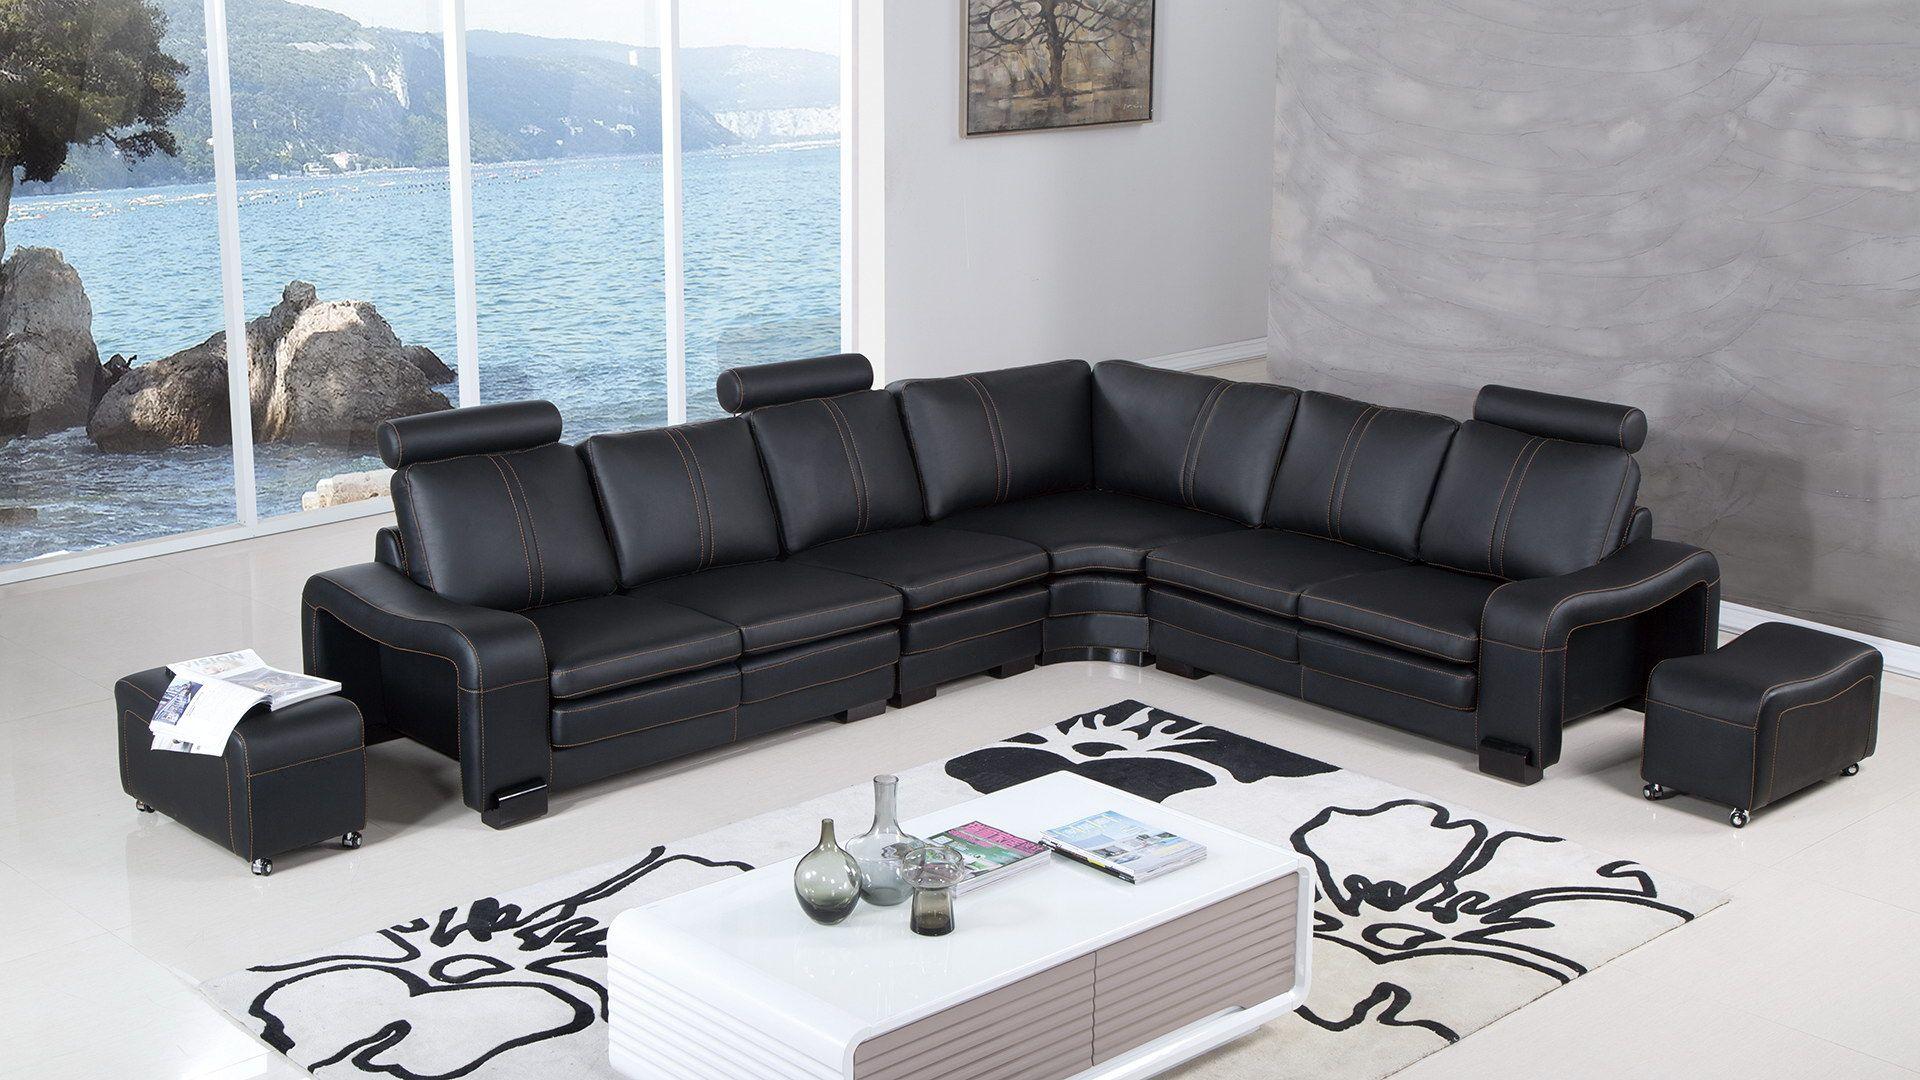 American Eagle Furniture AE-L213M-BK Sectional Sofa Set